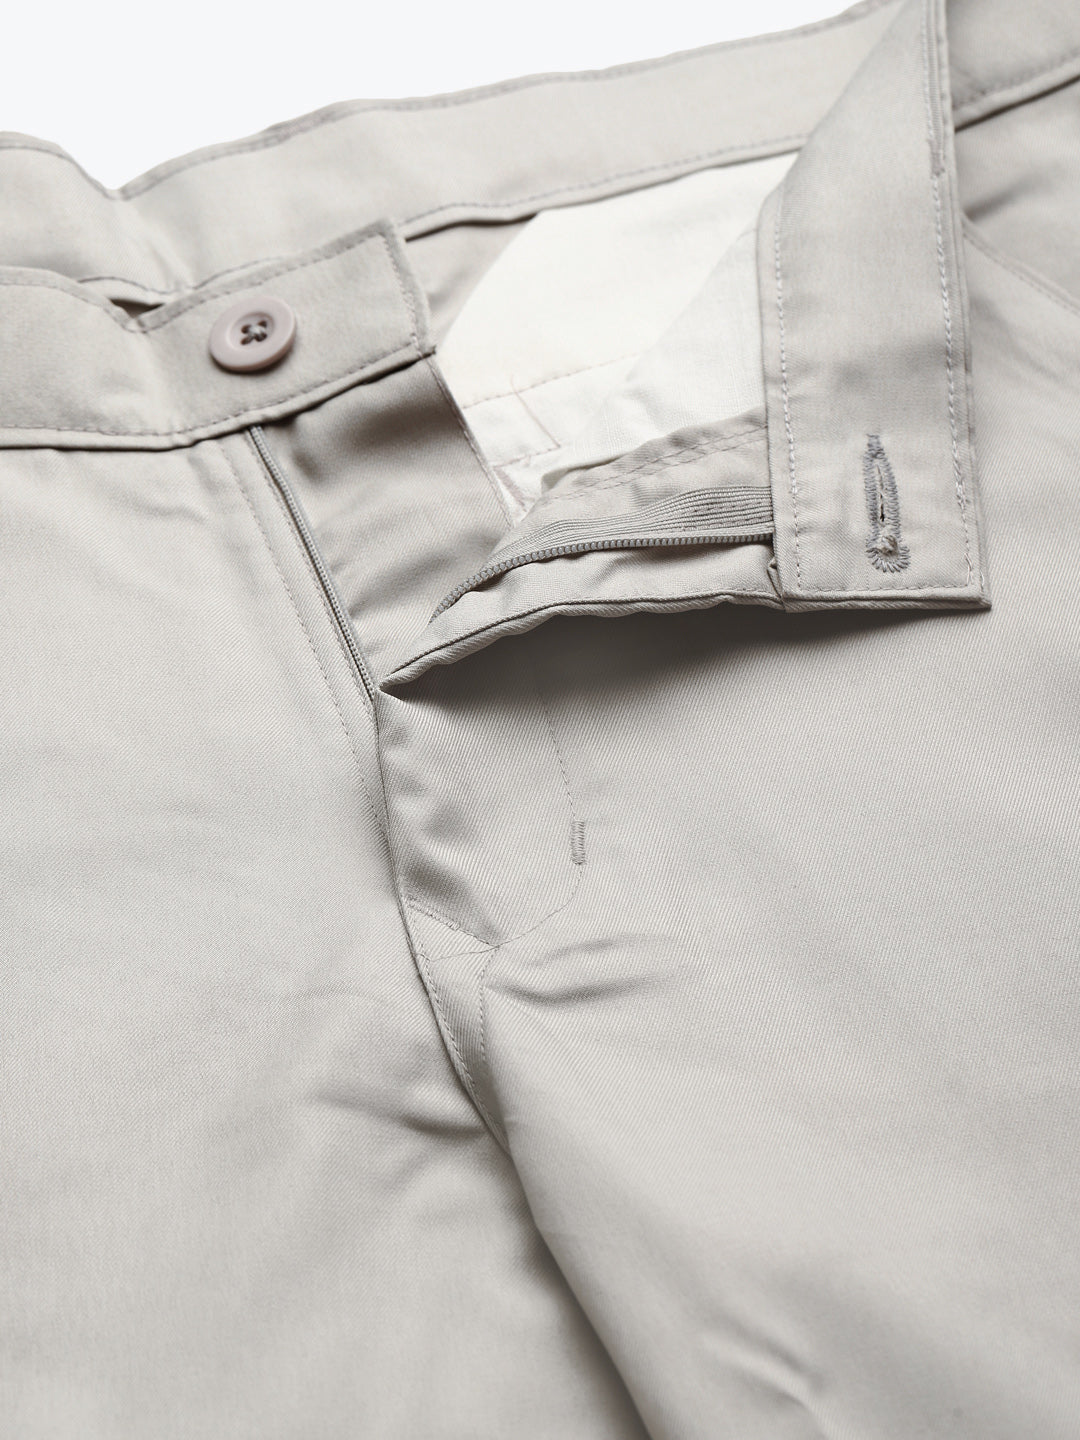 Men's Cotton Blend Light grey Solid Trouser - Sojanya